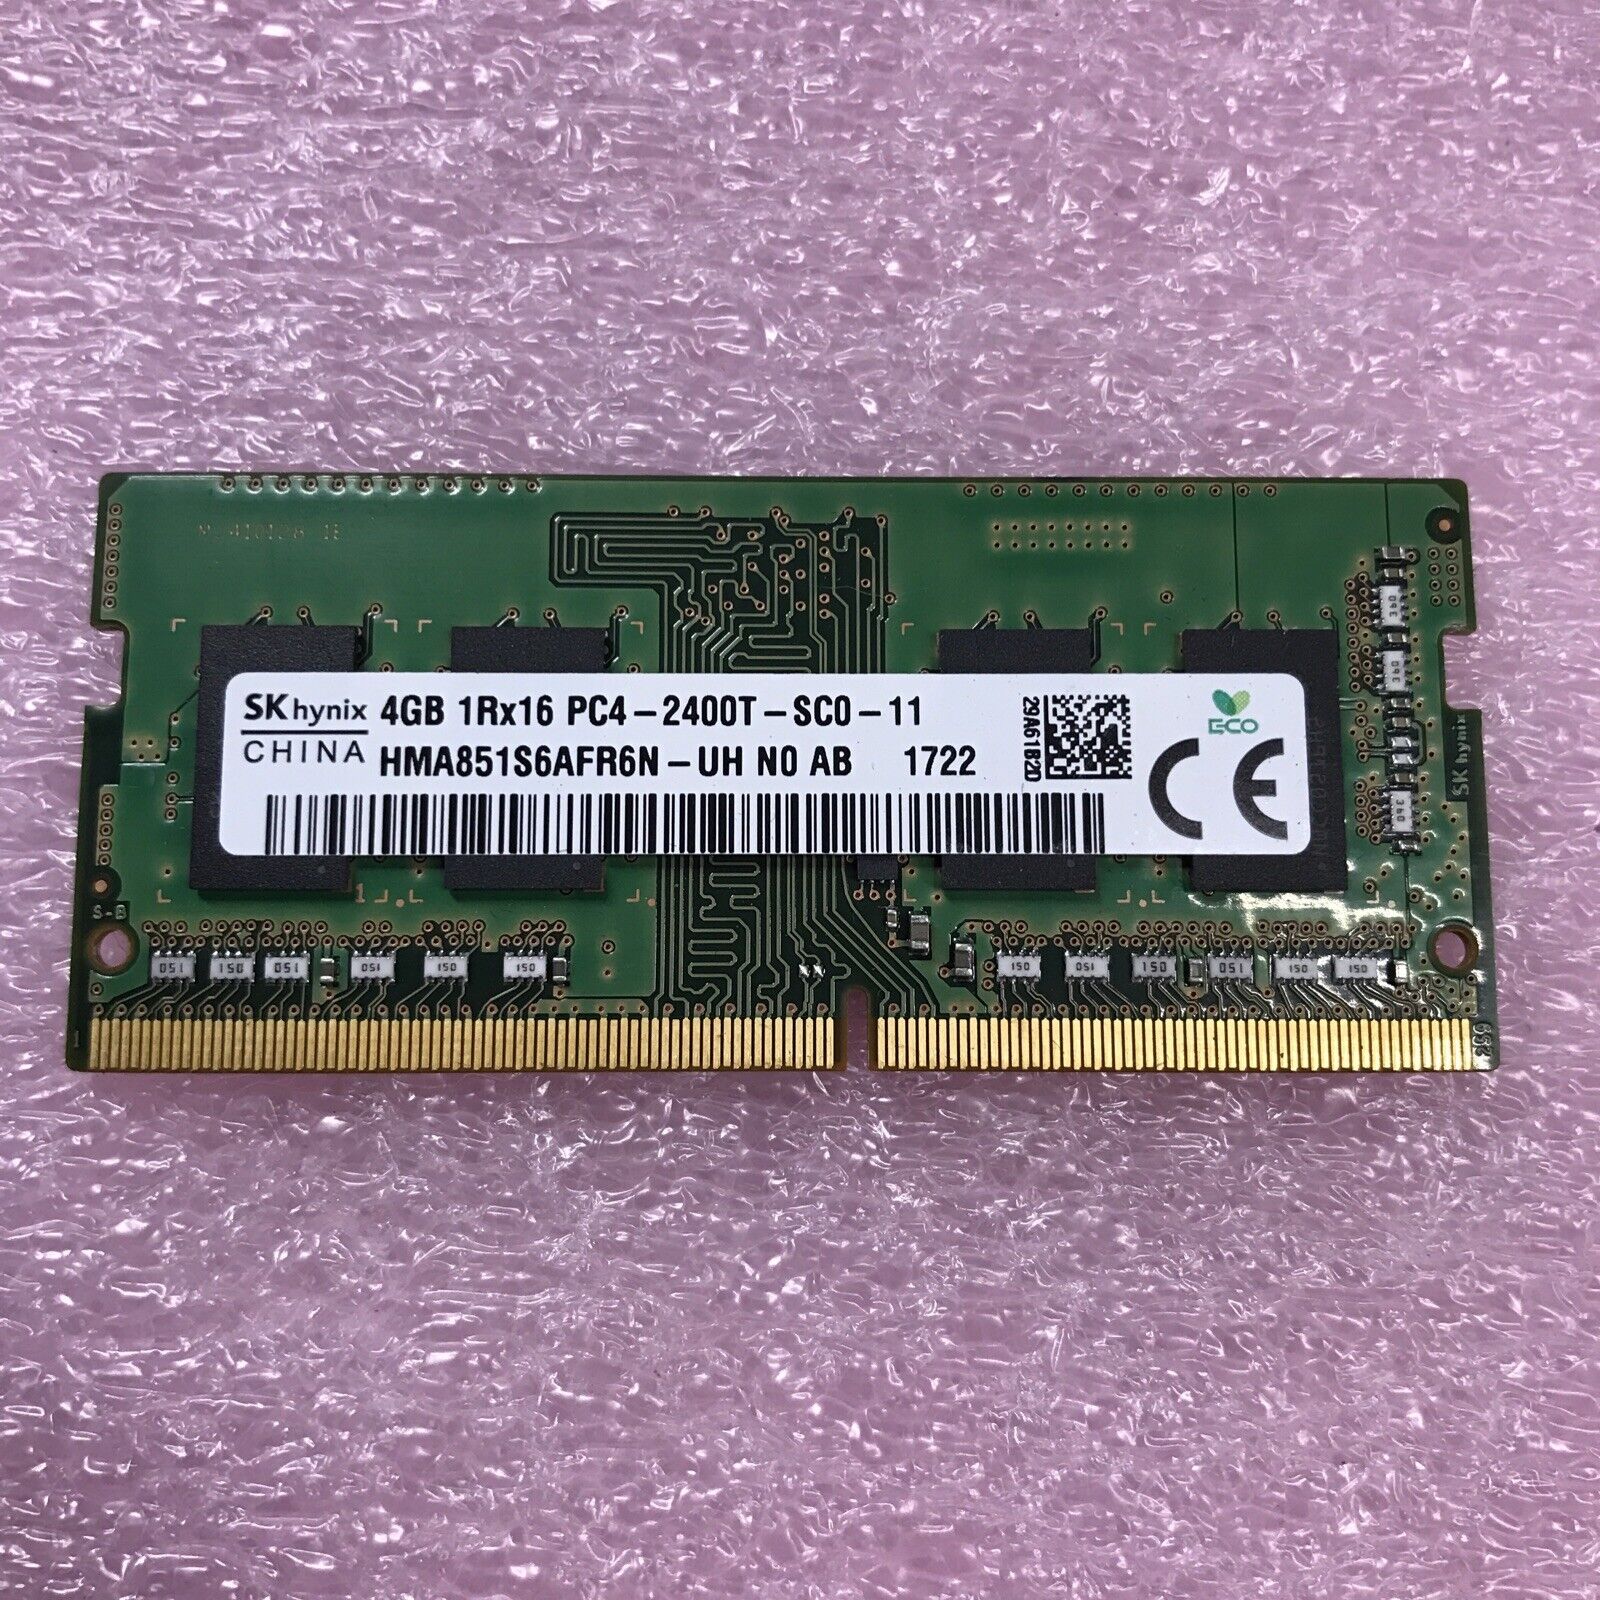 Hynix 4GB 1Rx16 PC4-2400T-SC0-11 Laptop Memory HMA851S6AFR6N